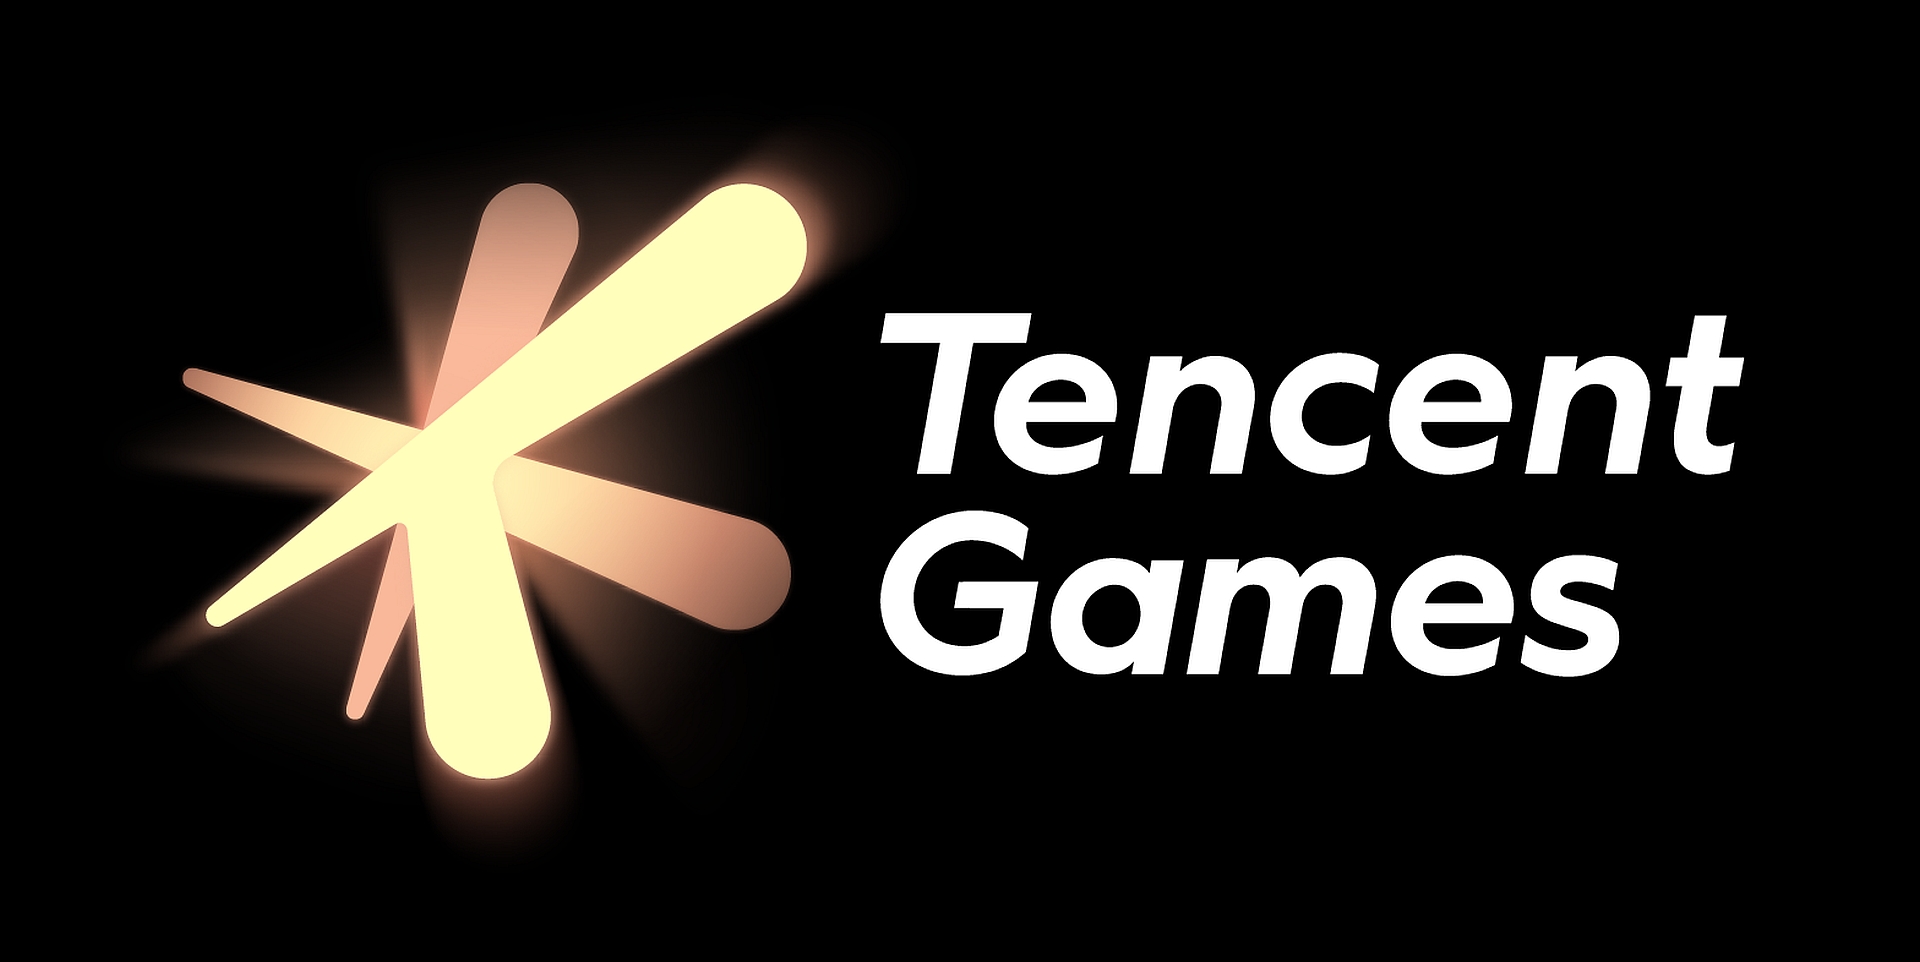 Tencent mobile games. Tencent игры. Тенсент гейм. Логотип тенсент. Логотип Tencent games.